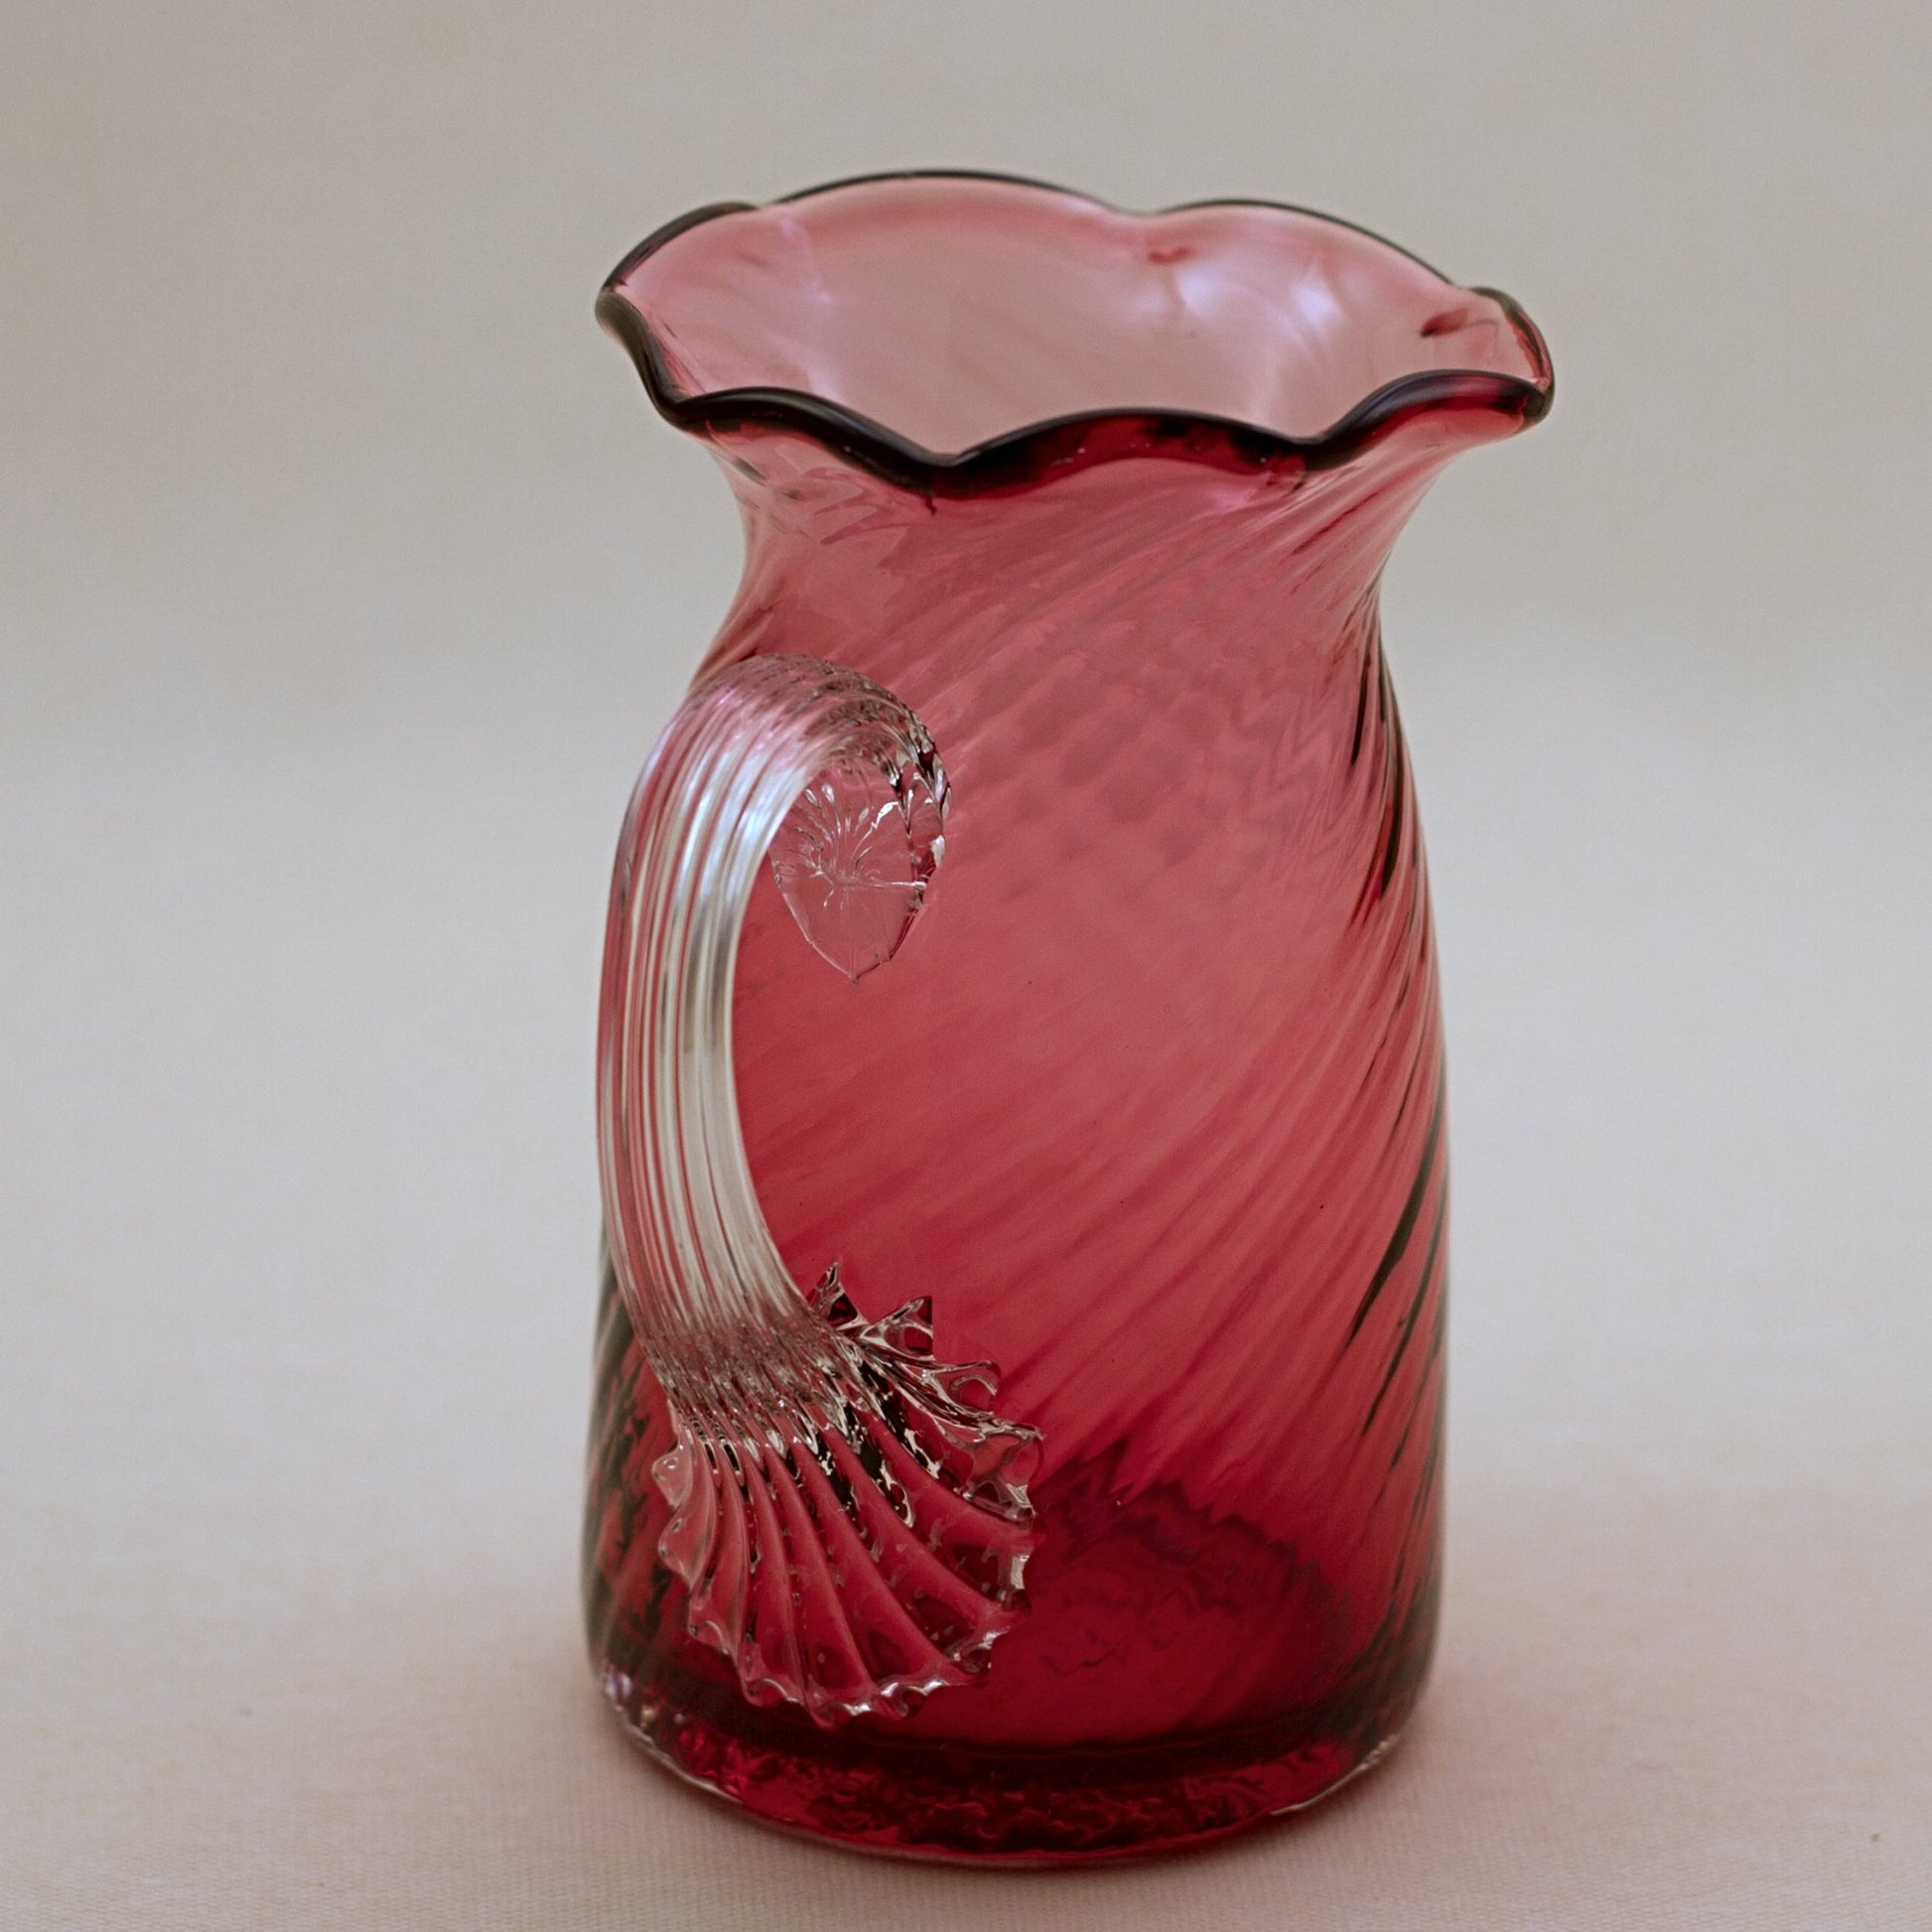 PILGRIM CRANBERRY GLASS Ruffled Rim Pitcher with Optic Swirl